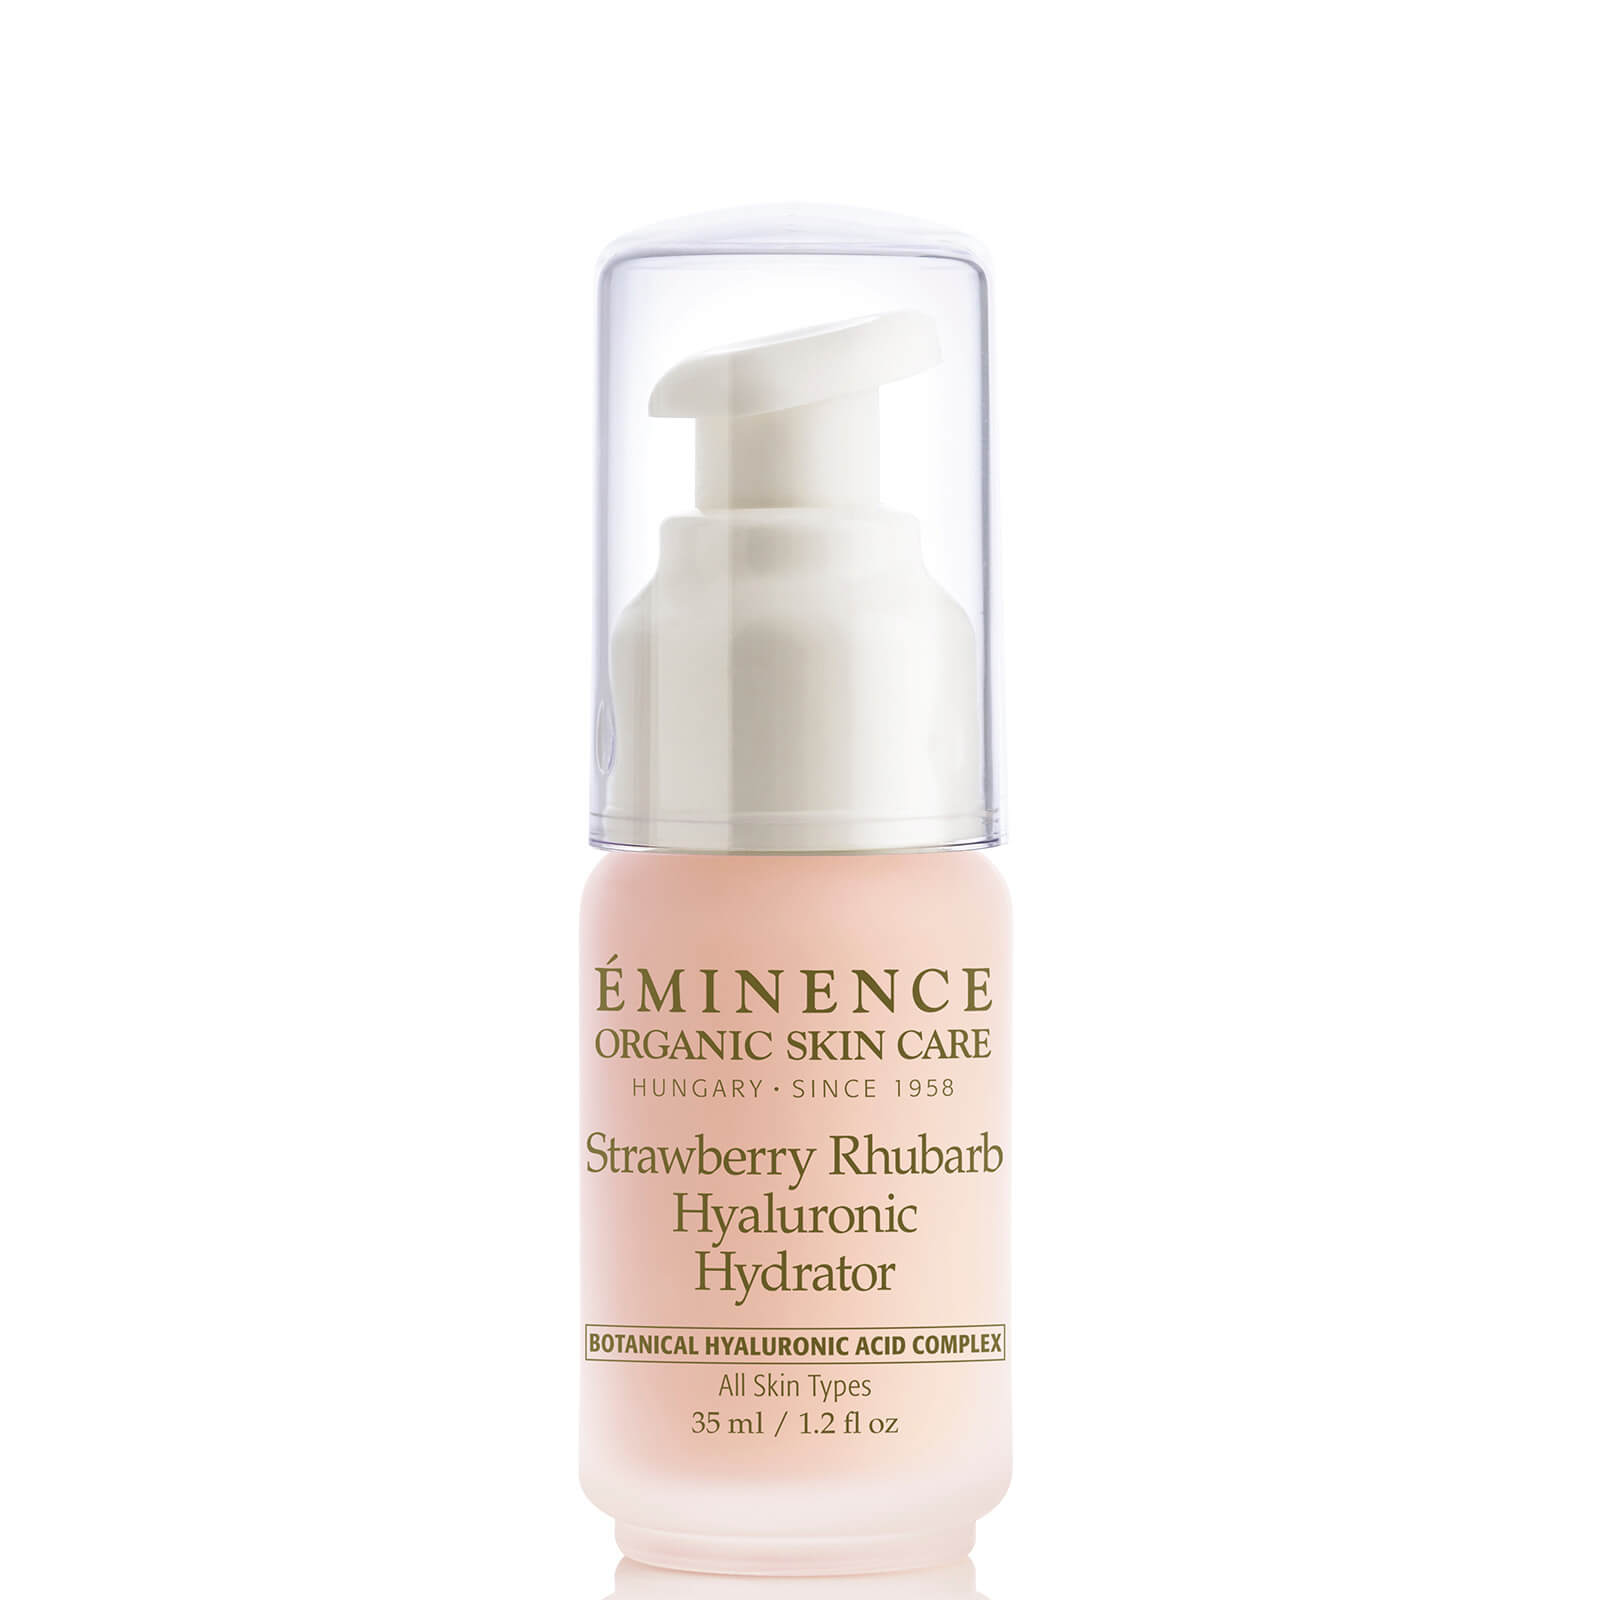 Eminence Organic Skin Care Eminence Strawberry Rhubarb Hyaluronic Hydrator